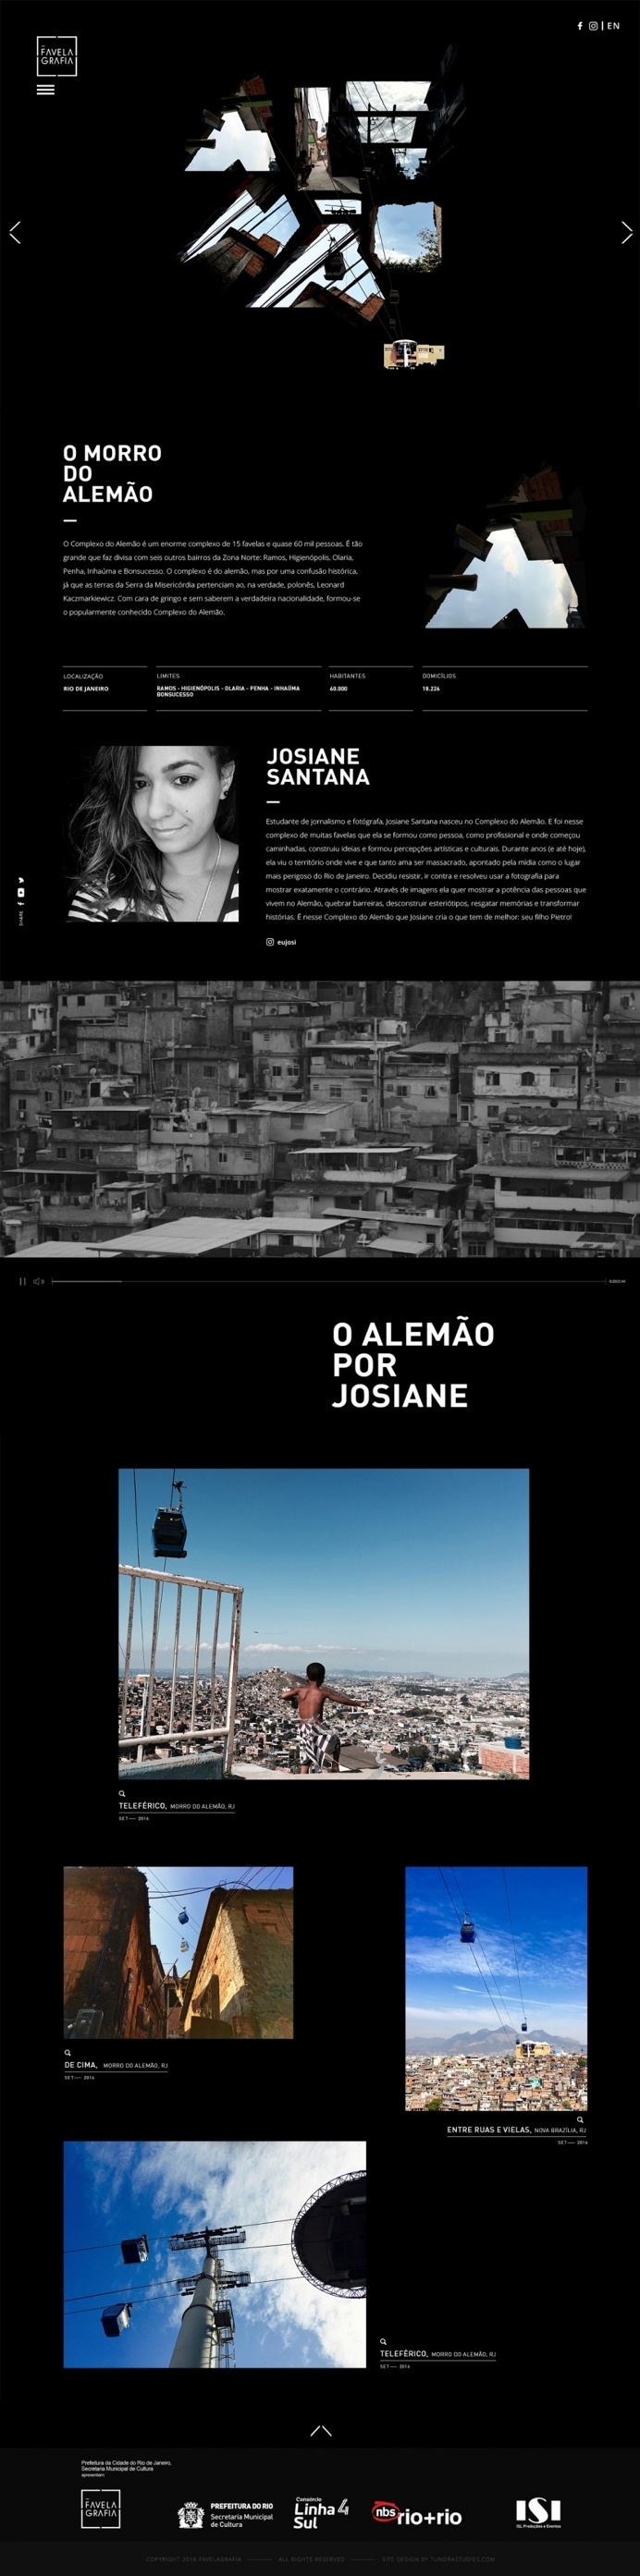 Favelagrafia – Mindsparkle Mag – Favelgrafia situs web yang indah desain web minimal situs sotd hari ini penghargaan mindparkle mag video graffiti s